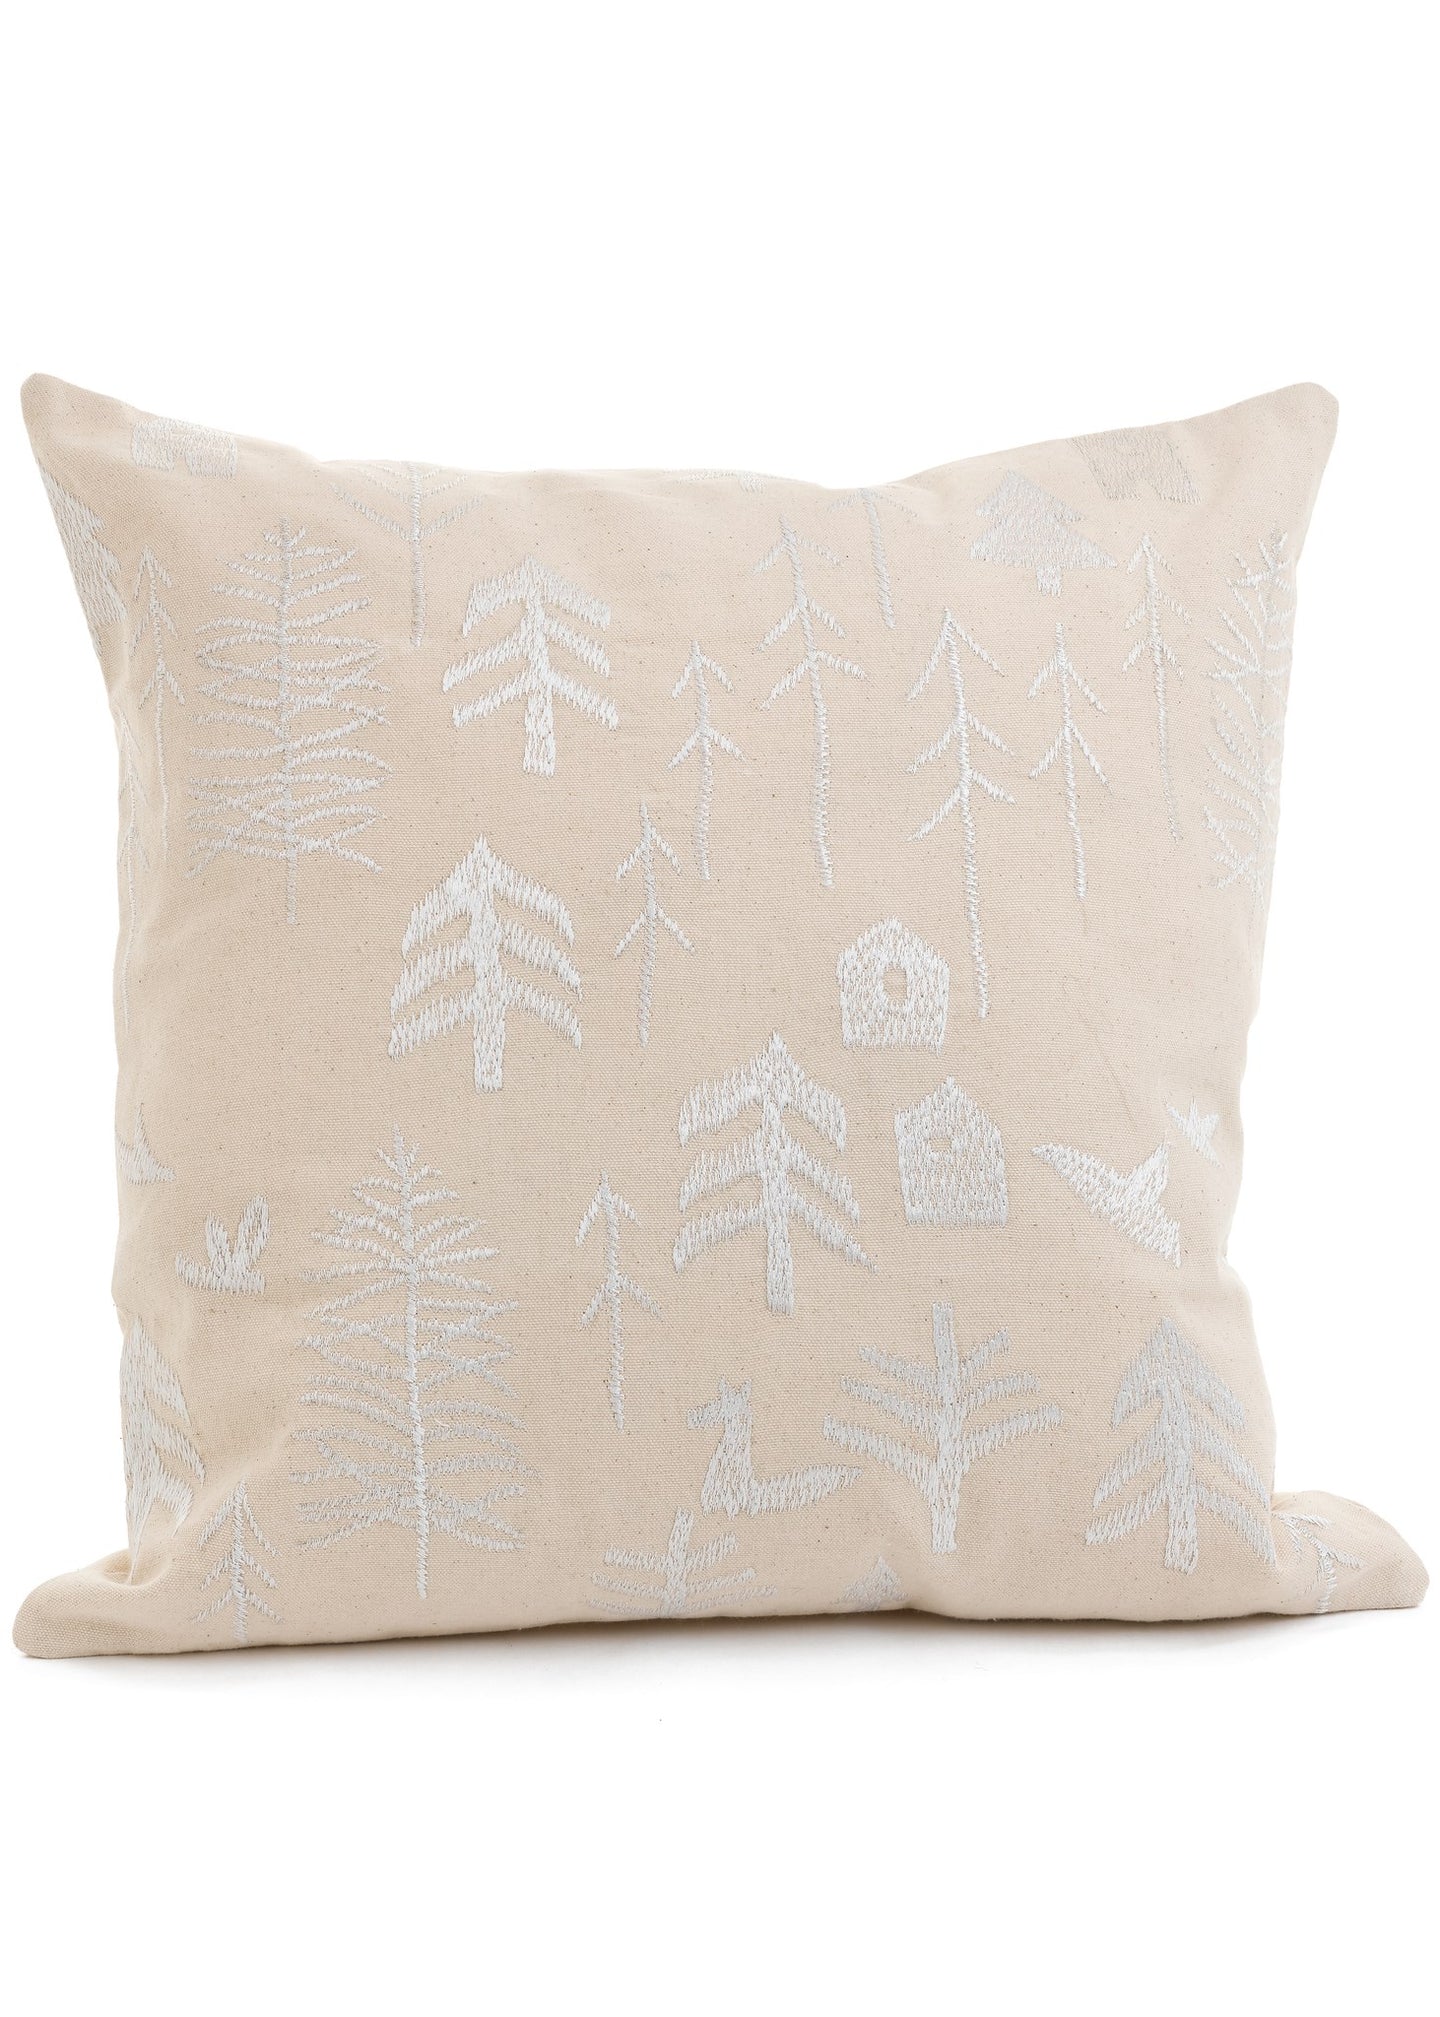 Cream Bird & Tree Pillows